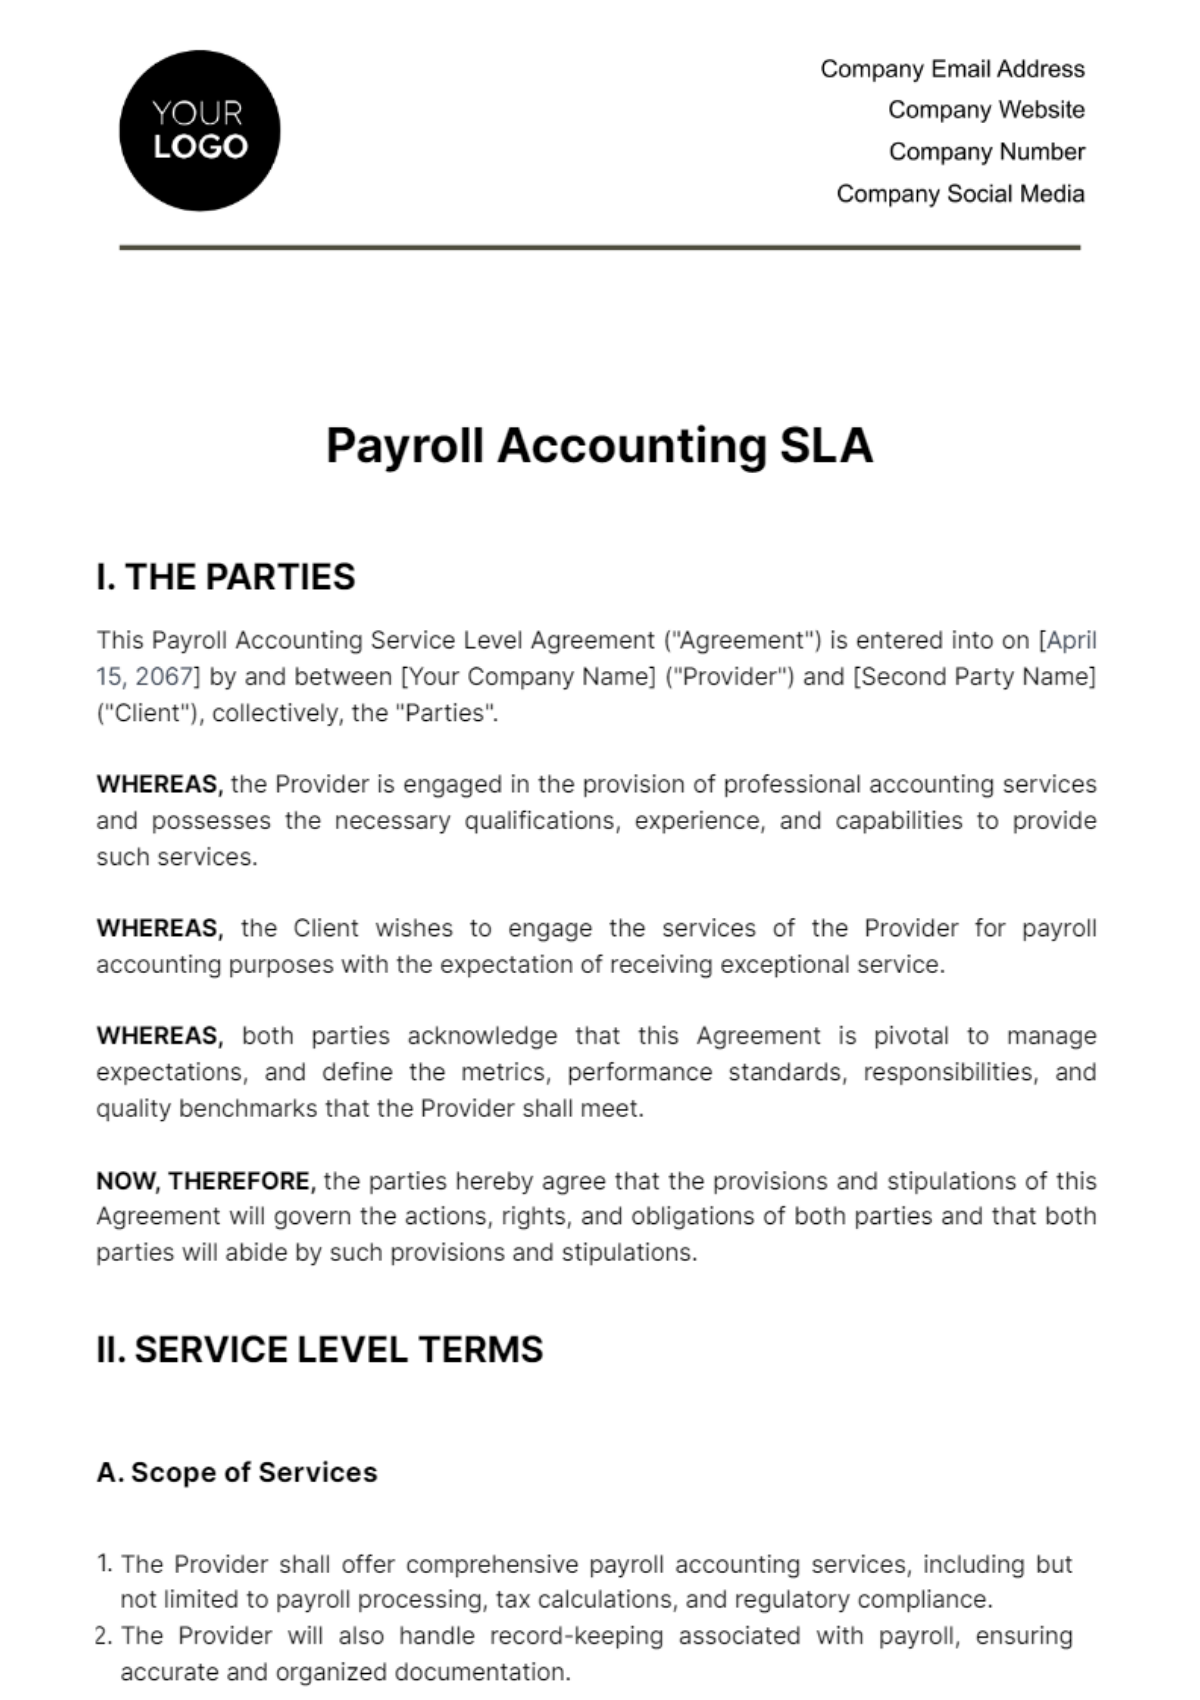 Payroll Accounting SLA Template